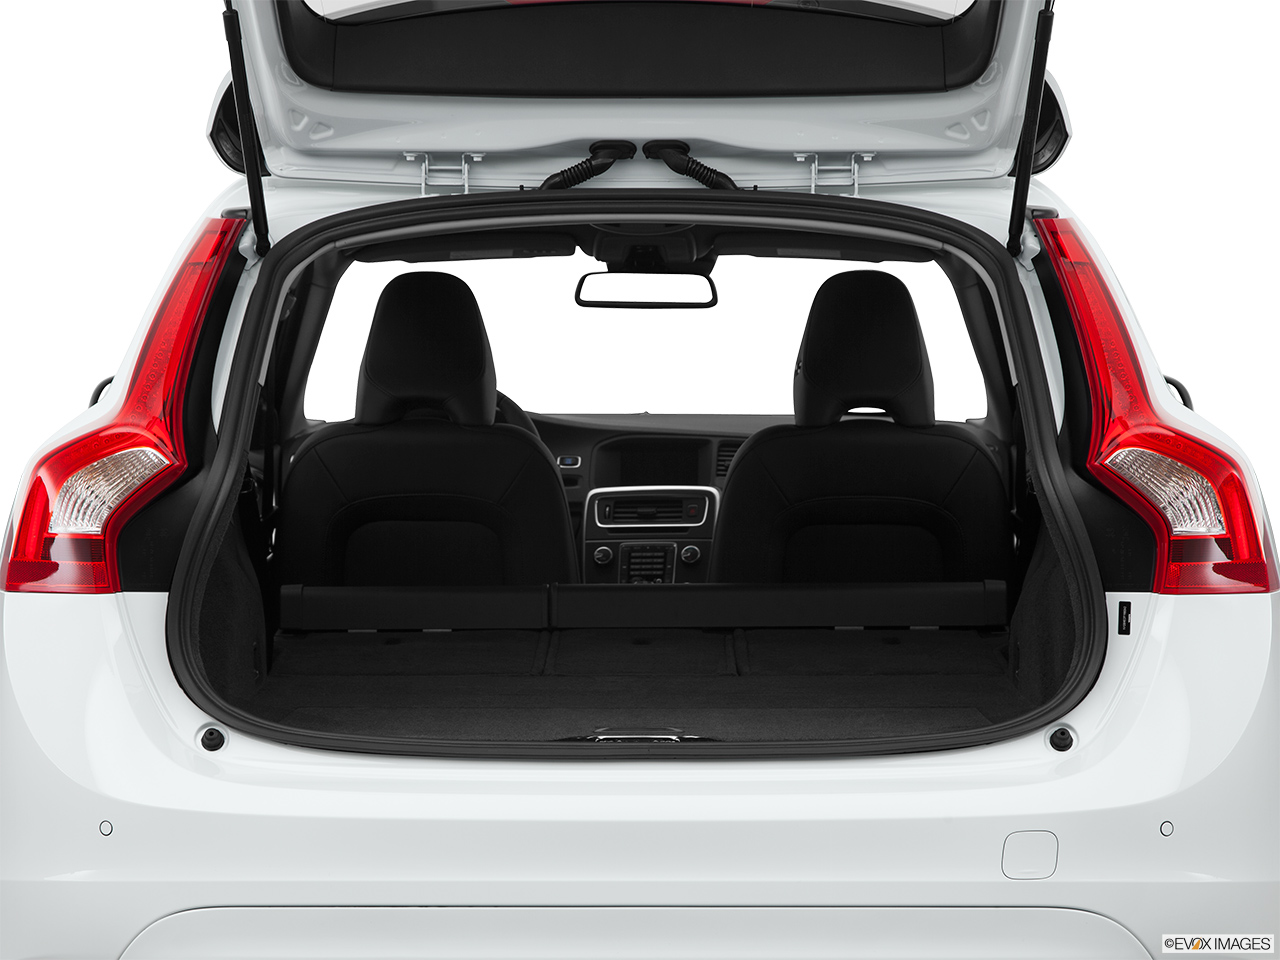 2015 Volvo V60 Premier Plus Hatchback & SUV rear angle. 